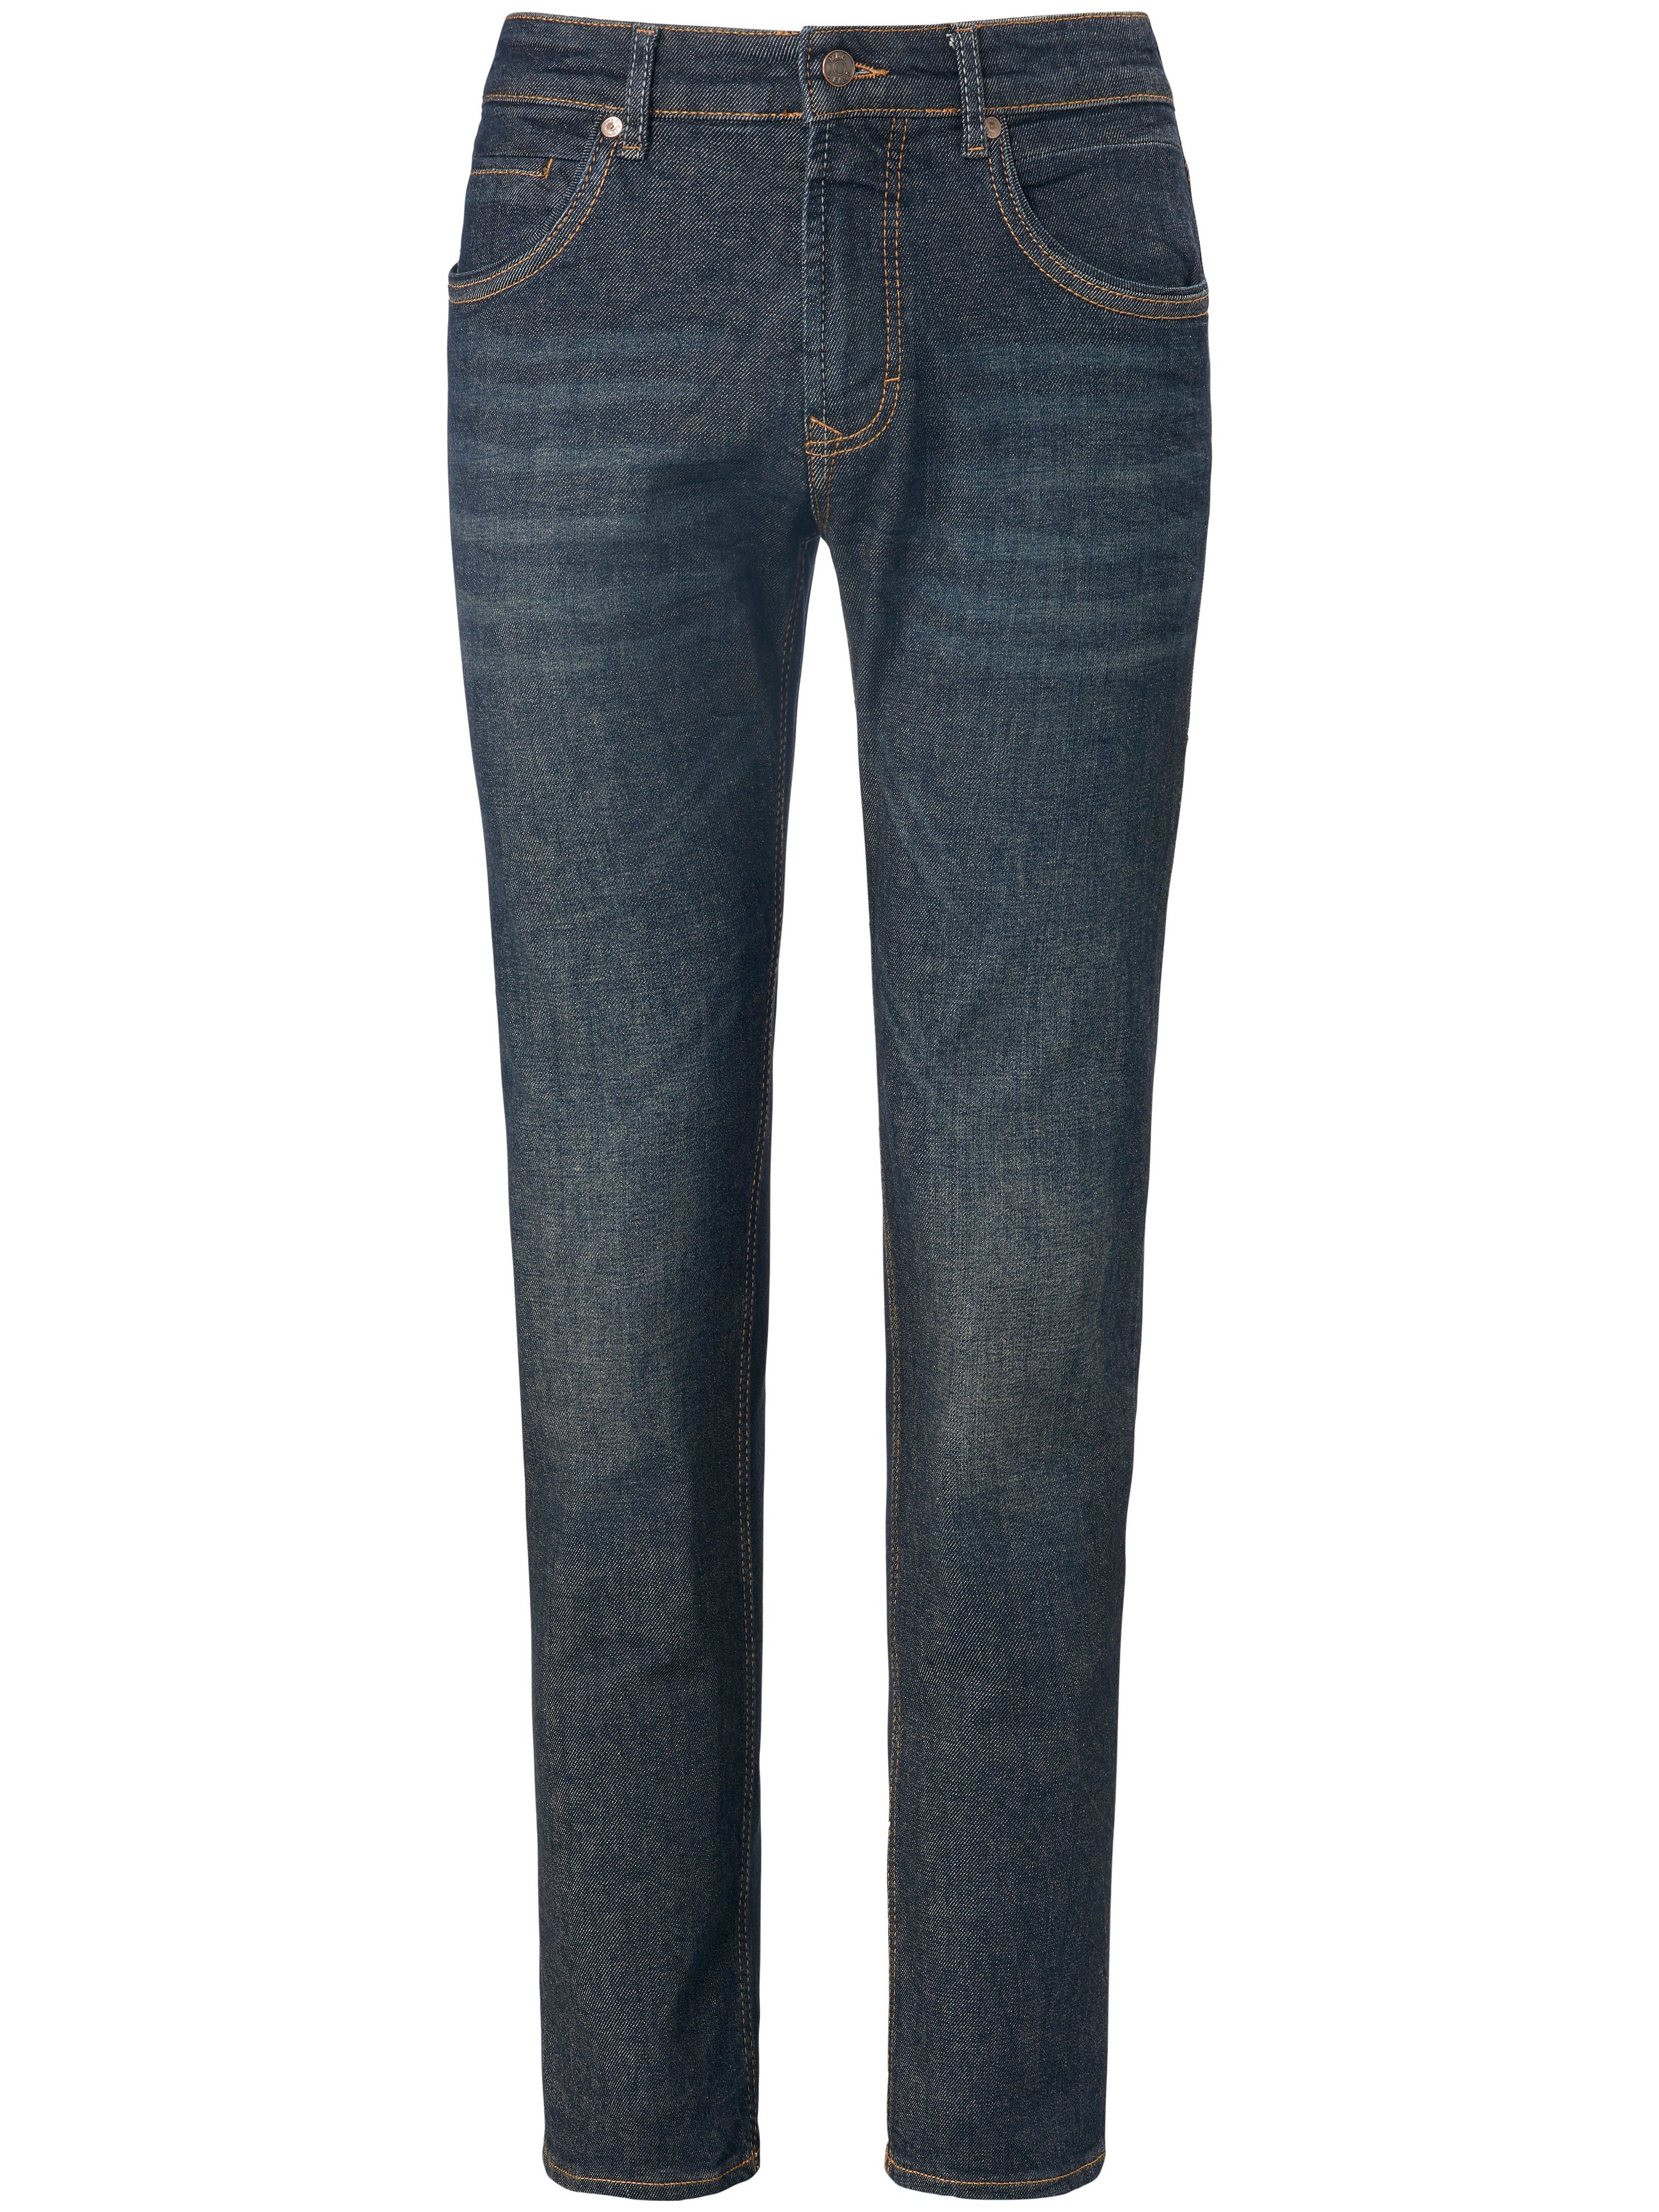 Le jean coupe Regular Fit modèle Arne Pipe  Mac denim taille 36